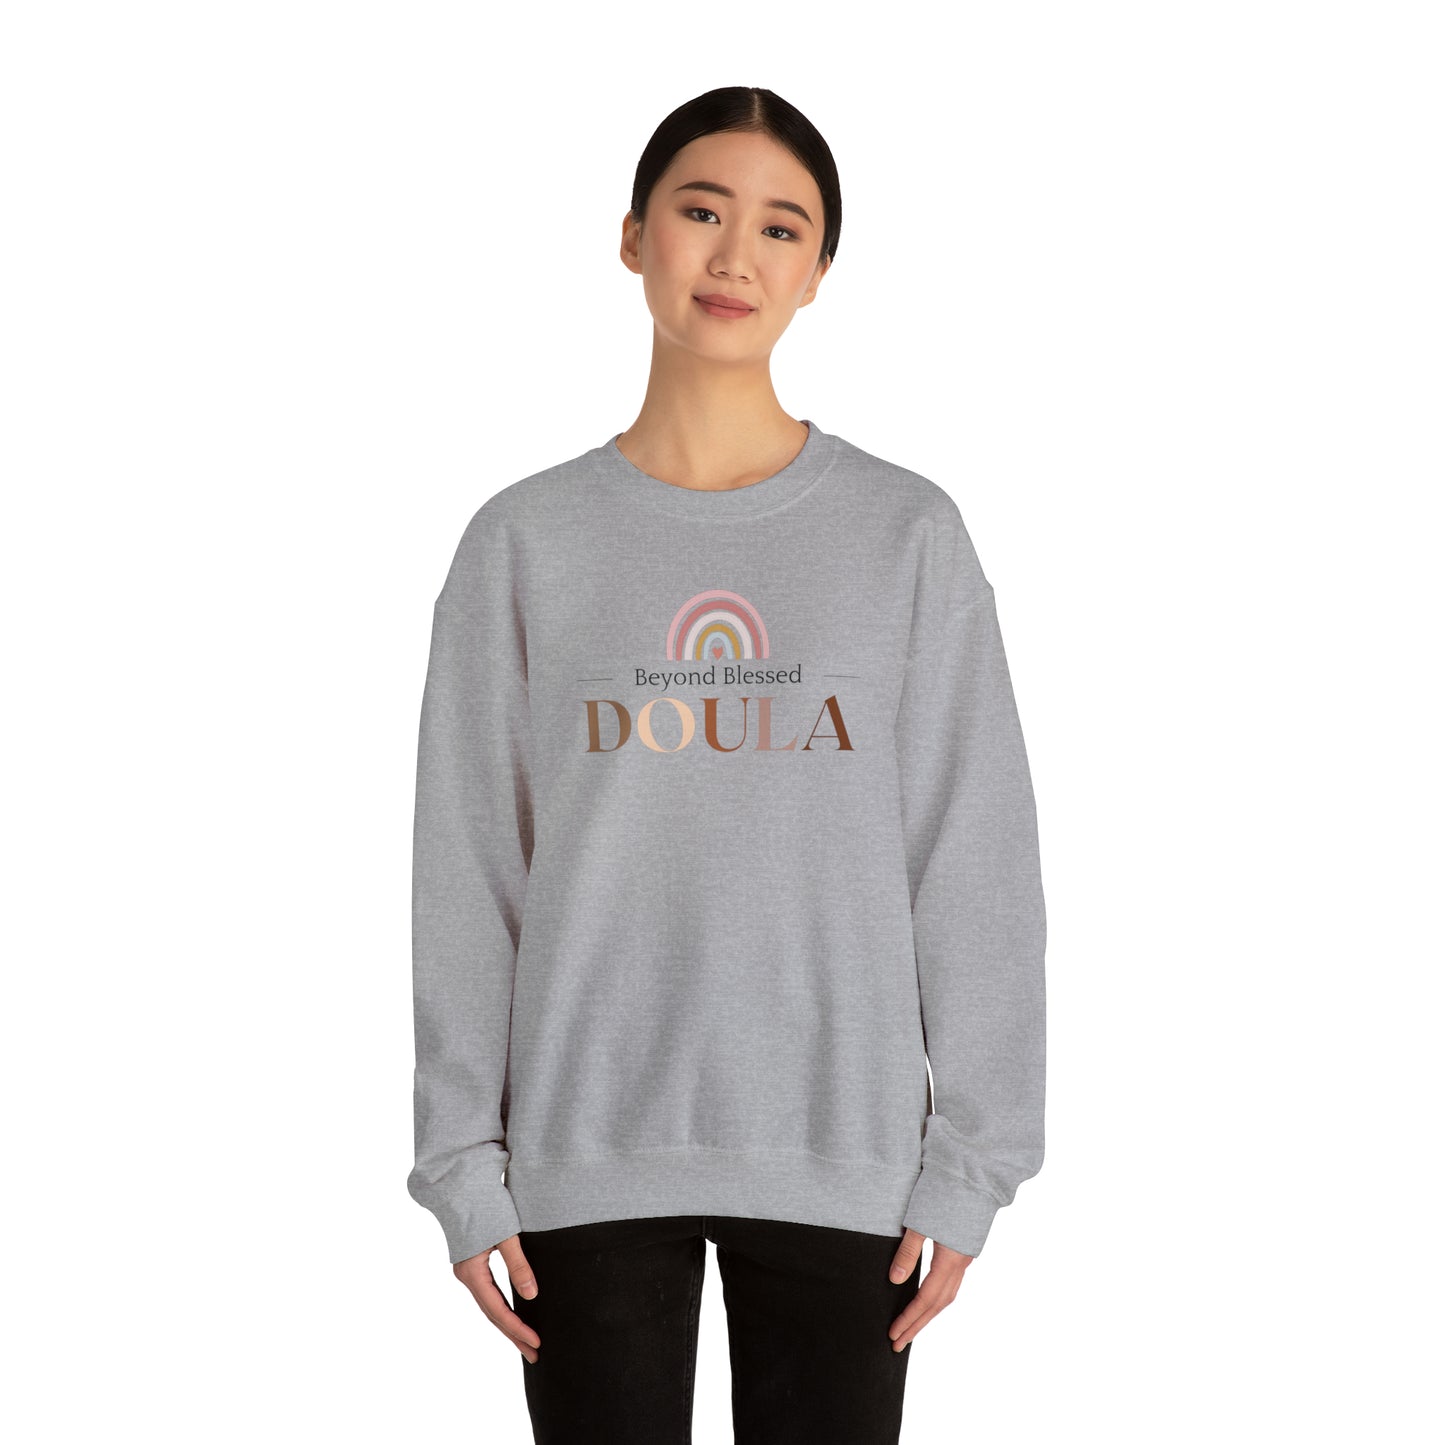 Beyond Blessed Doula - Crewneck Sweatshirt